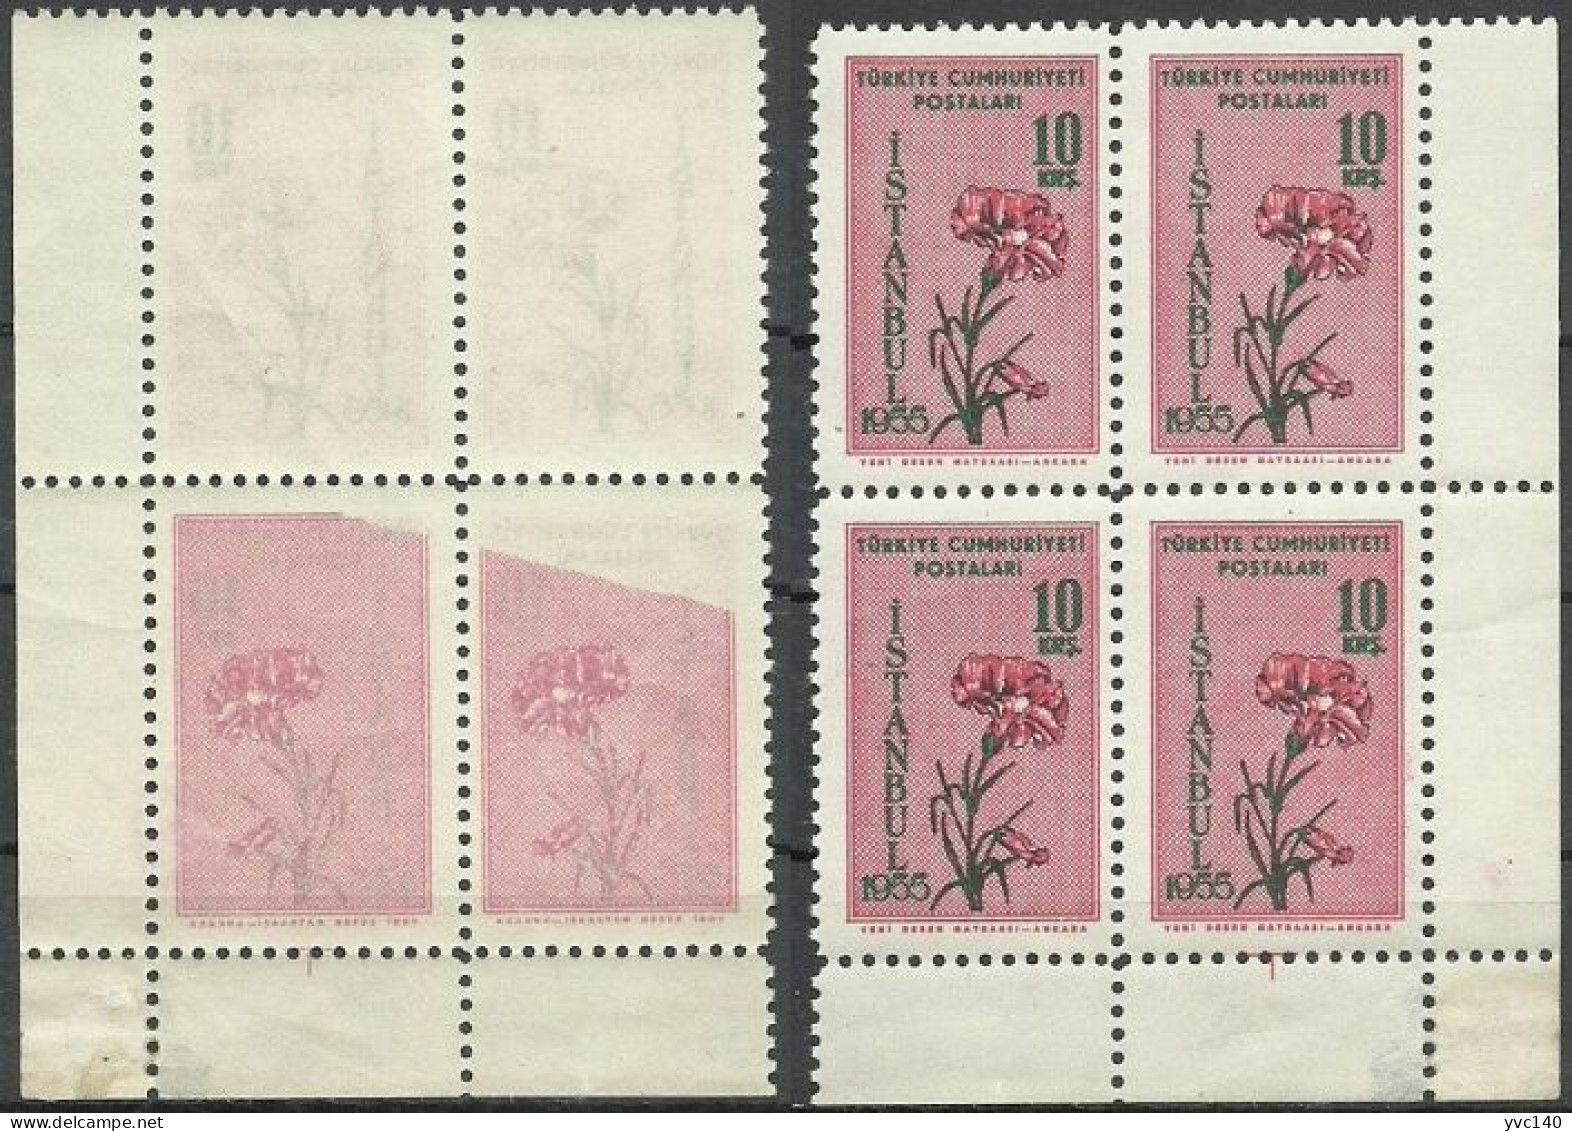 Turkey; 1955 Istanbul Spring And Flower Festivity 10 K. ERROR "Abklatsch Print" - Unused Stamps